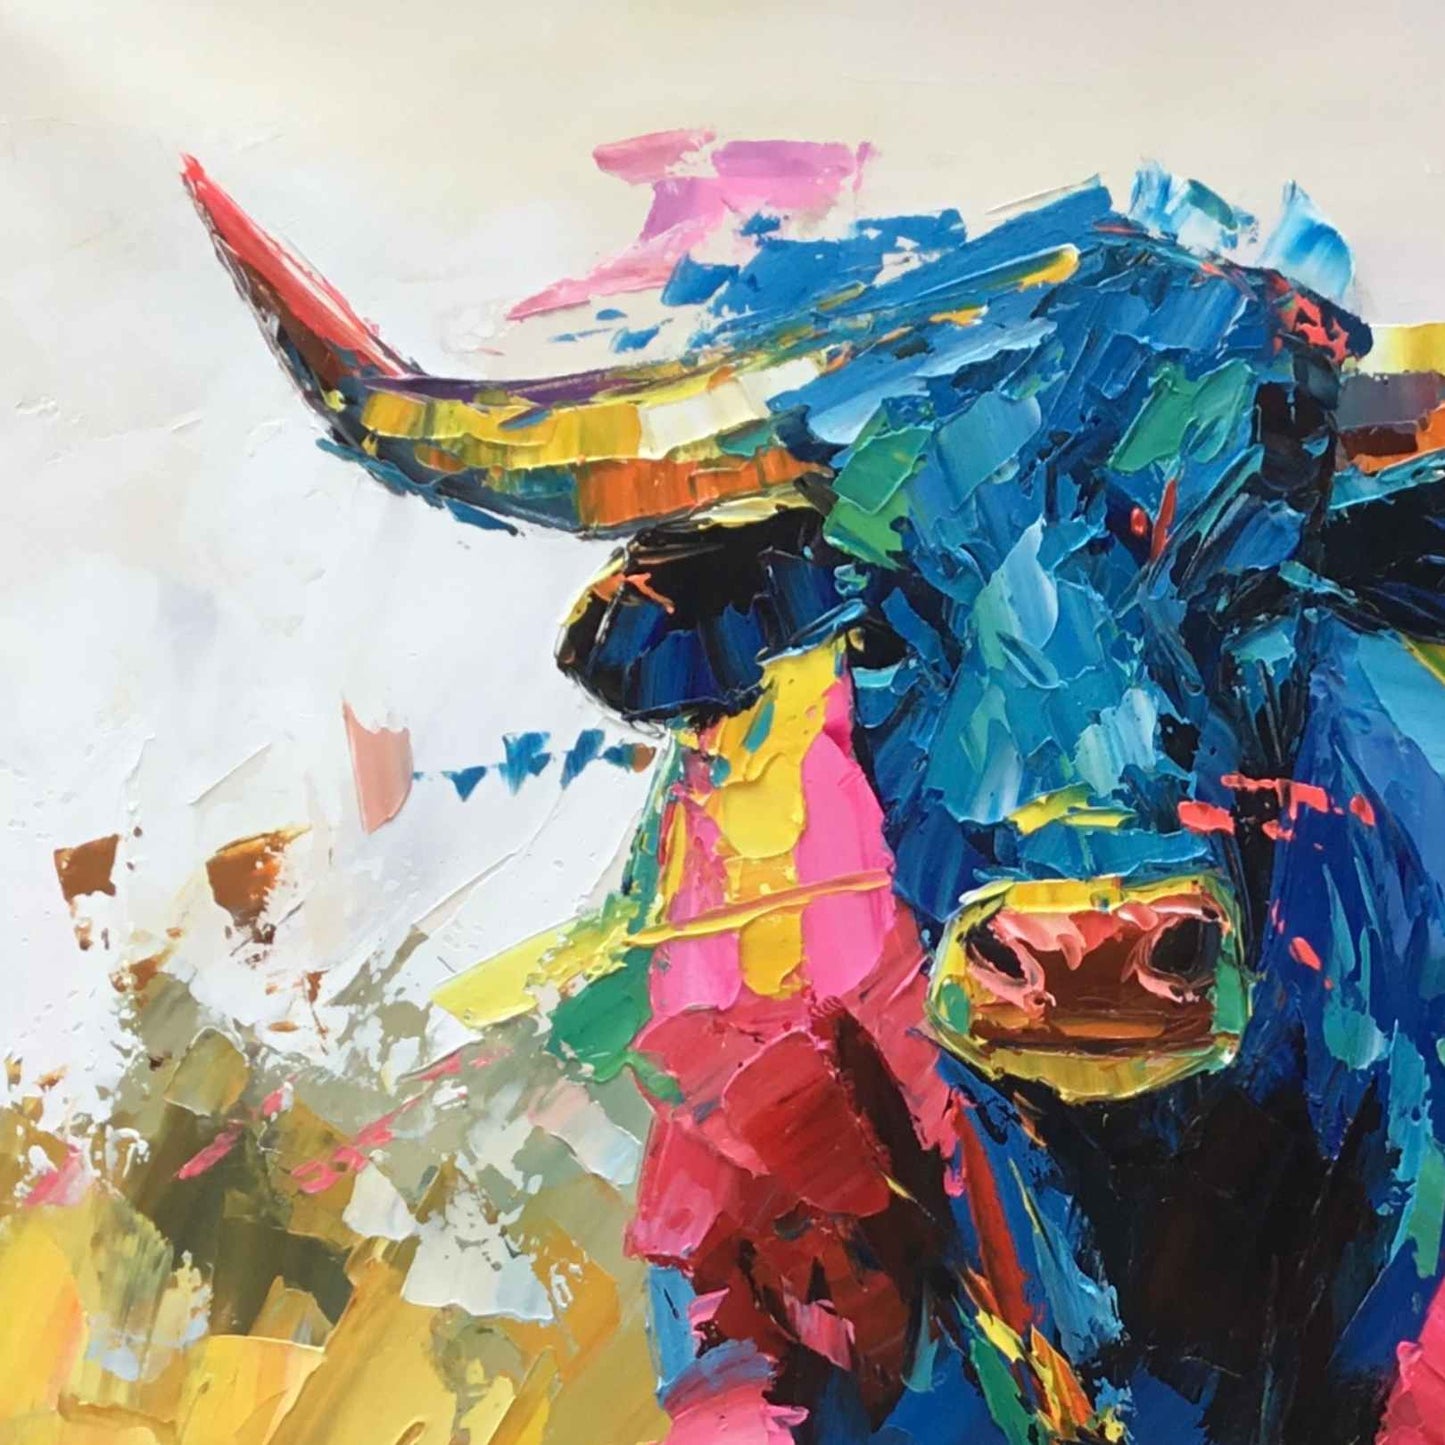 Oil Painting Bull strength and spirit 90x90 cm